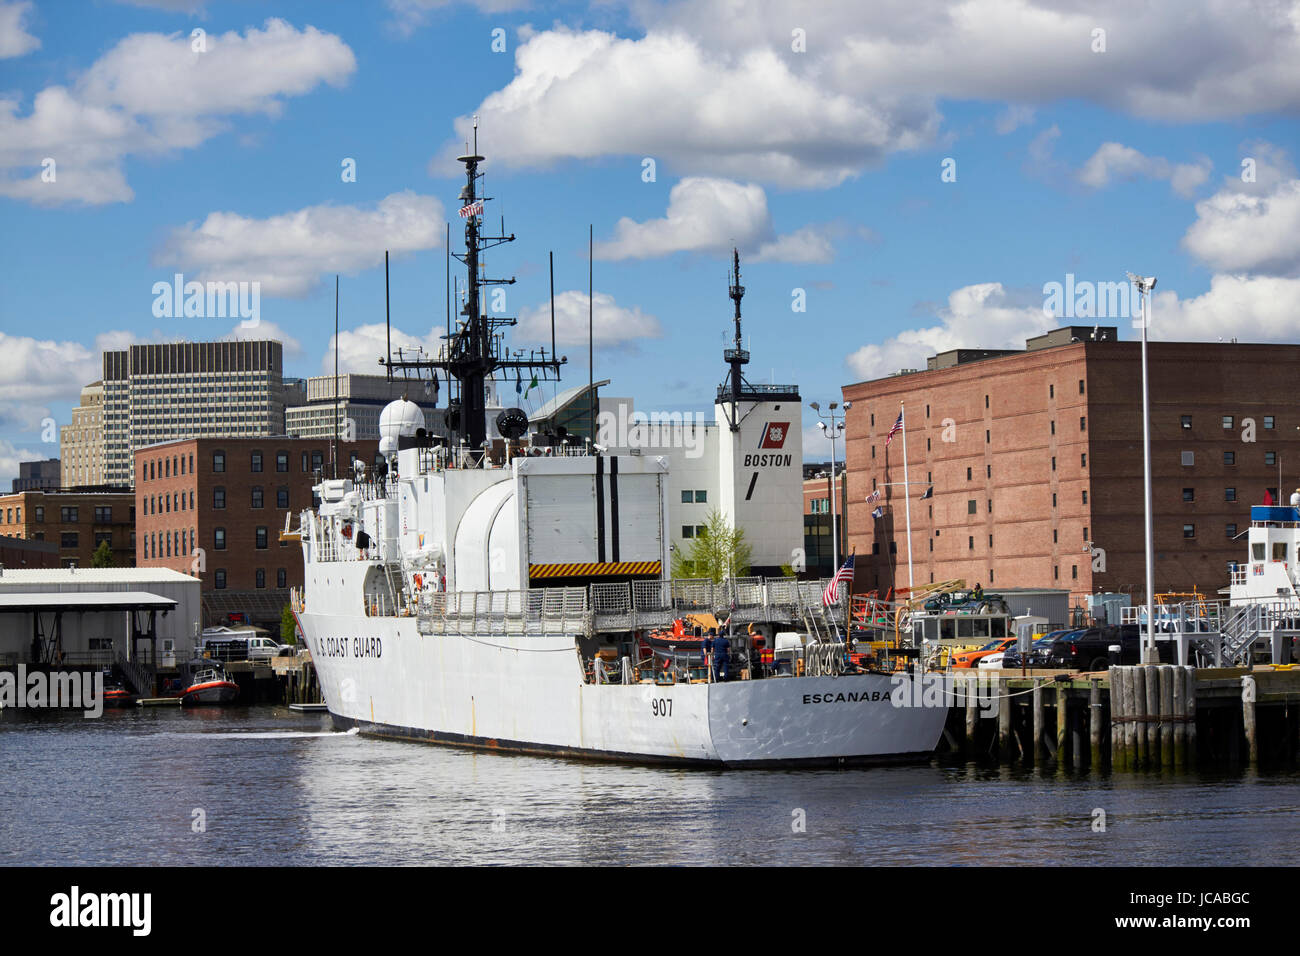 Us Coast Guard cutter uscgc escanaba resistencia mediana wmec 907 Boston EE.UU. Foto de stock